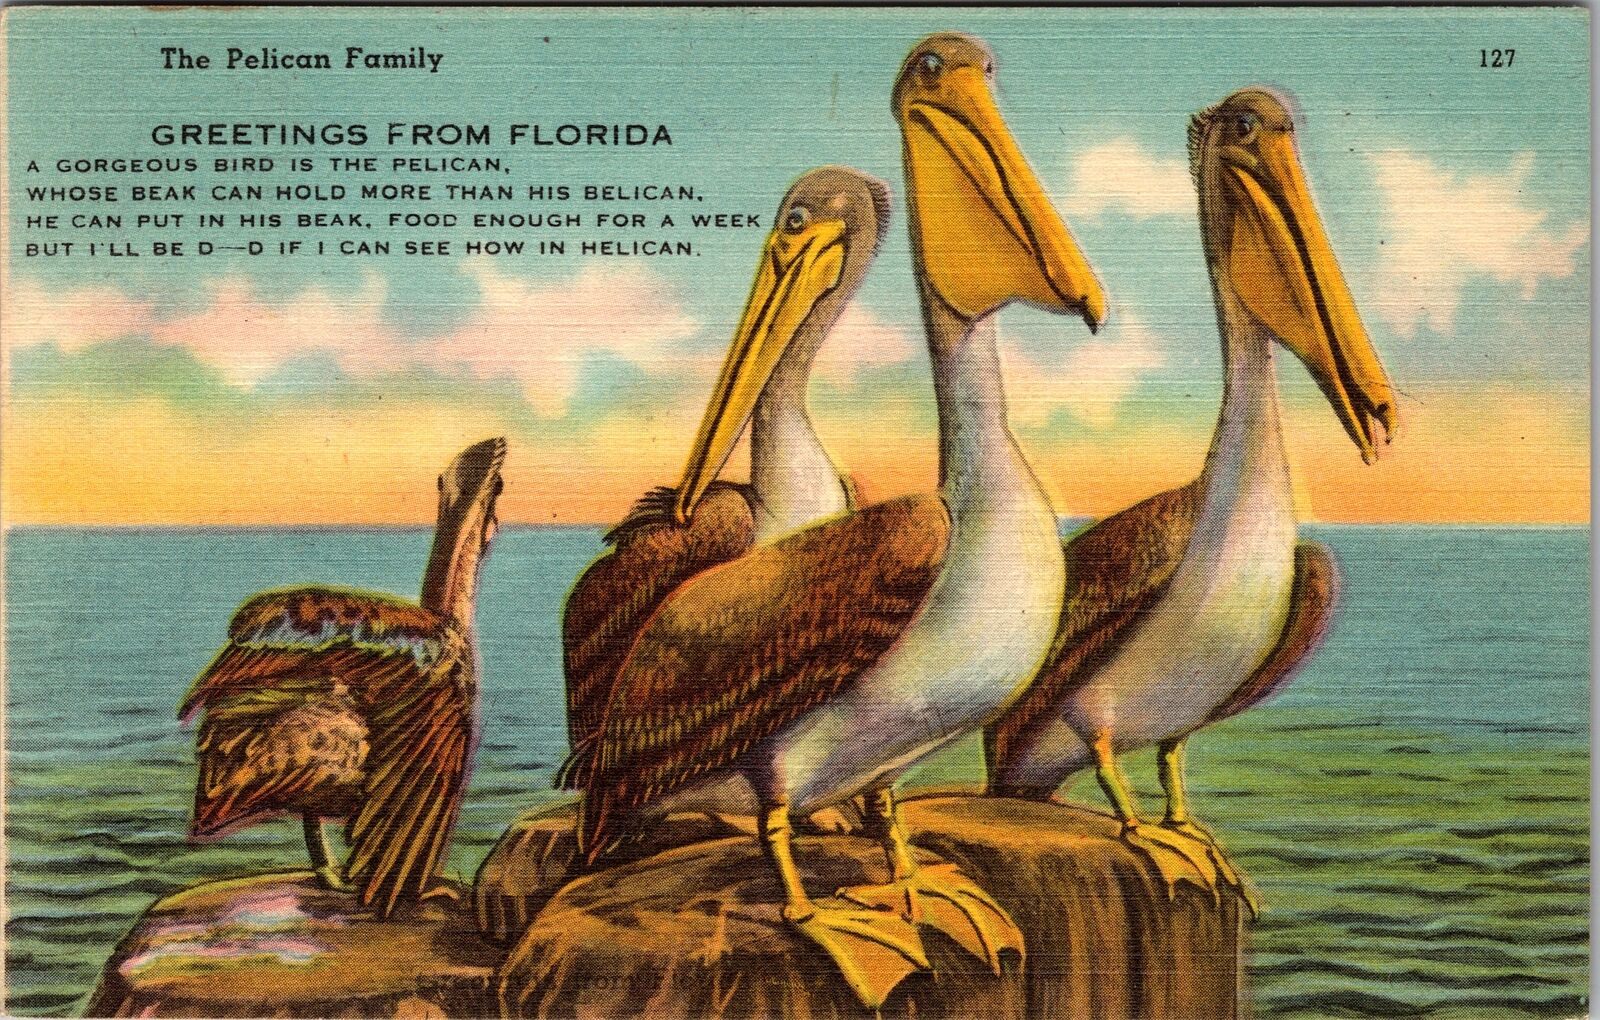 FL-Florida Greetings, A Pelican Family, Comical Poem, c1954 Vintage Postcard